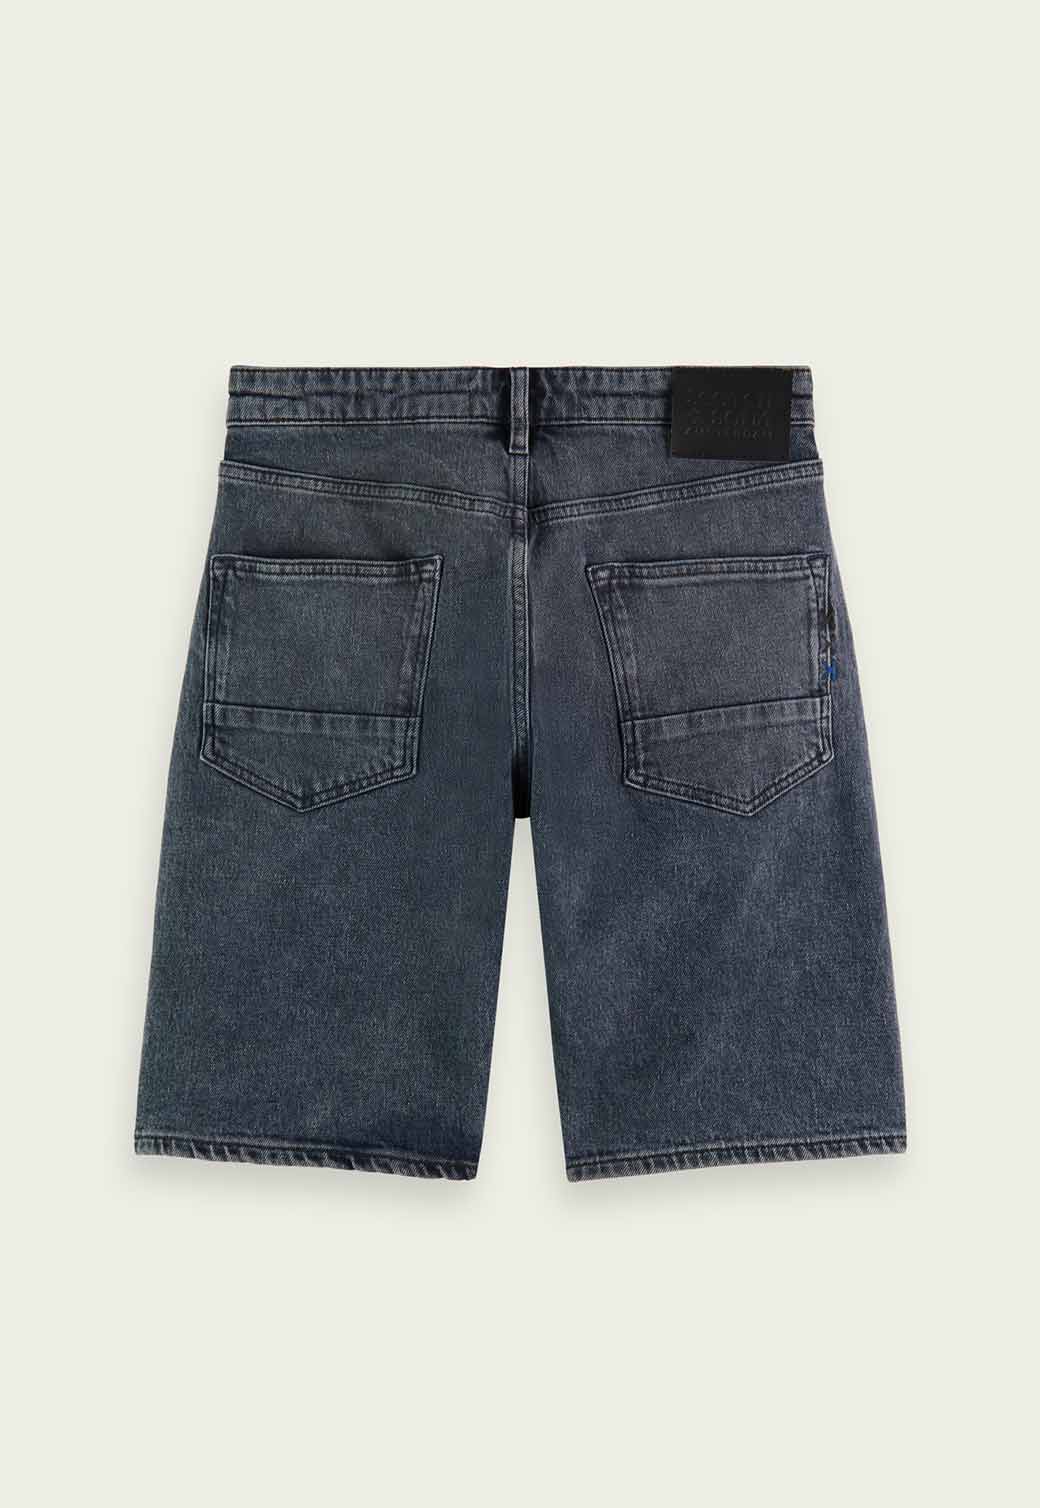 Beige ג'ינס קצר לגברים Ralston SCOTCH & SODA